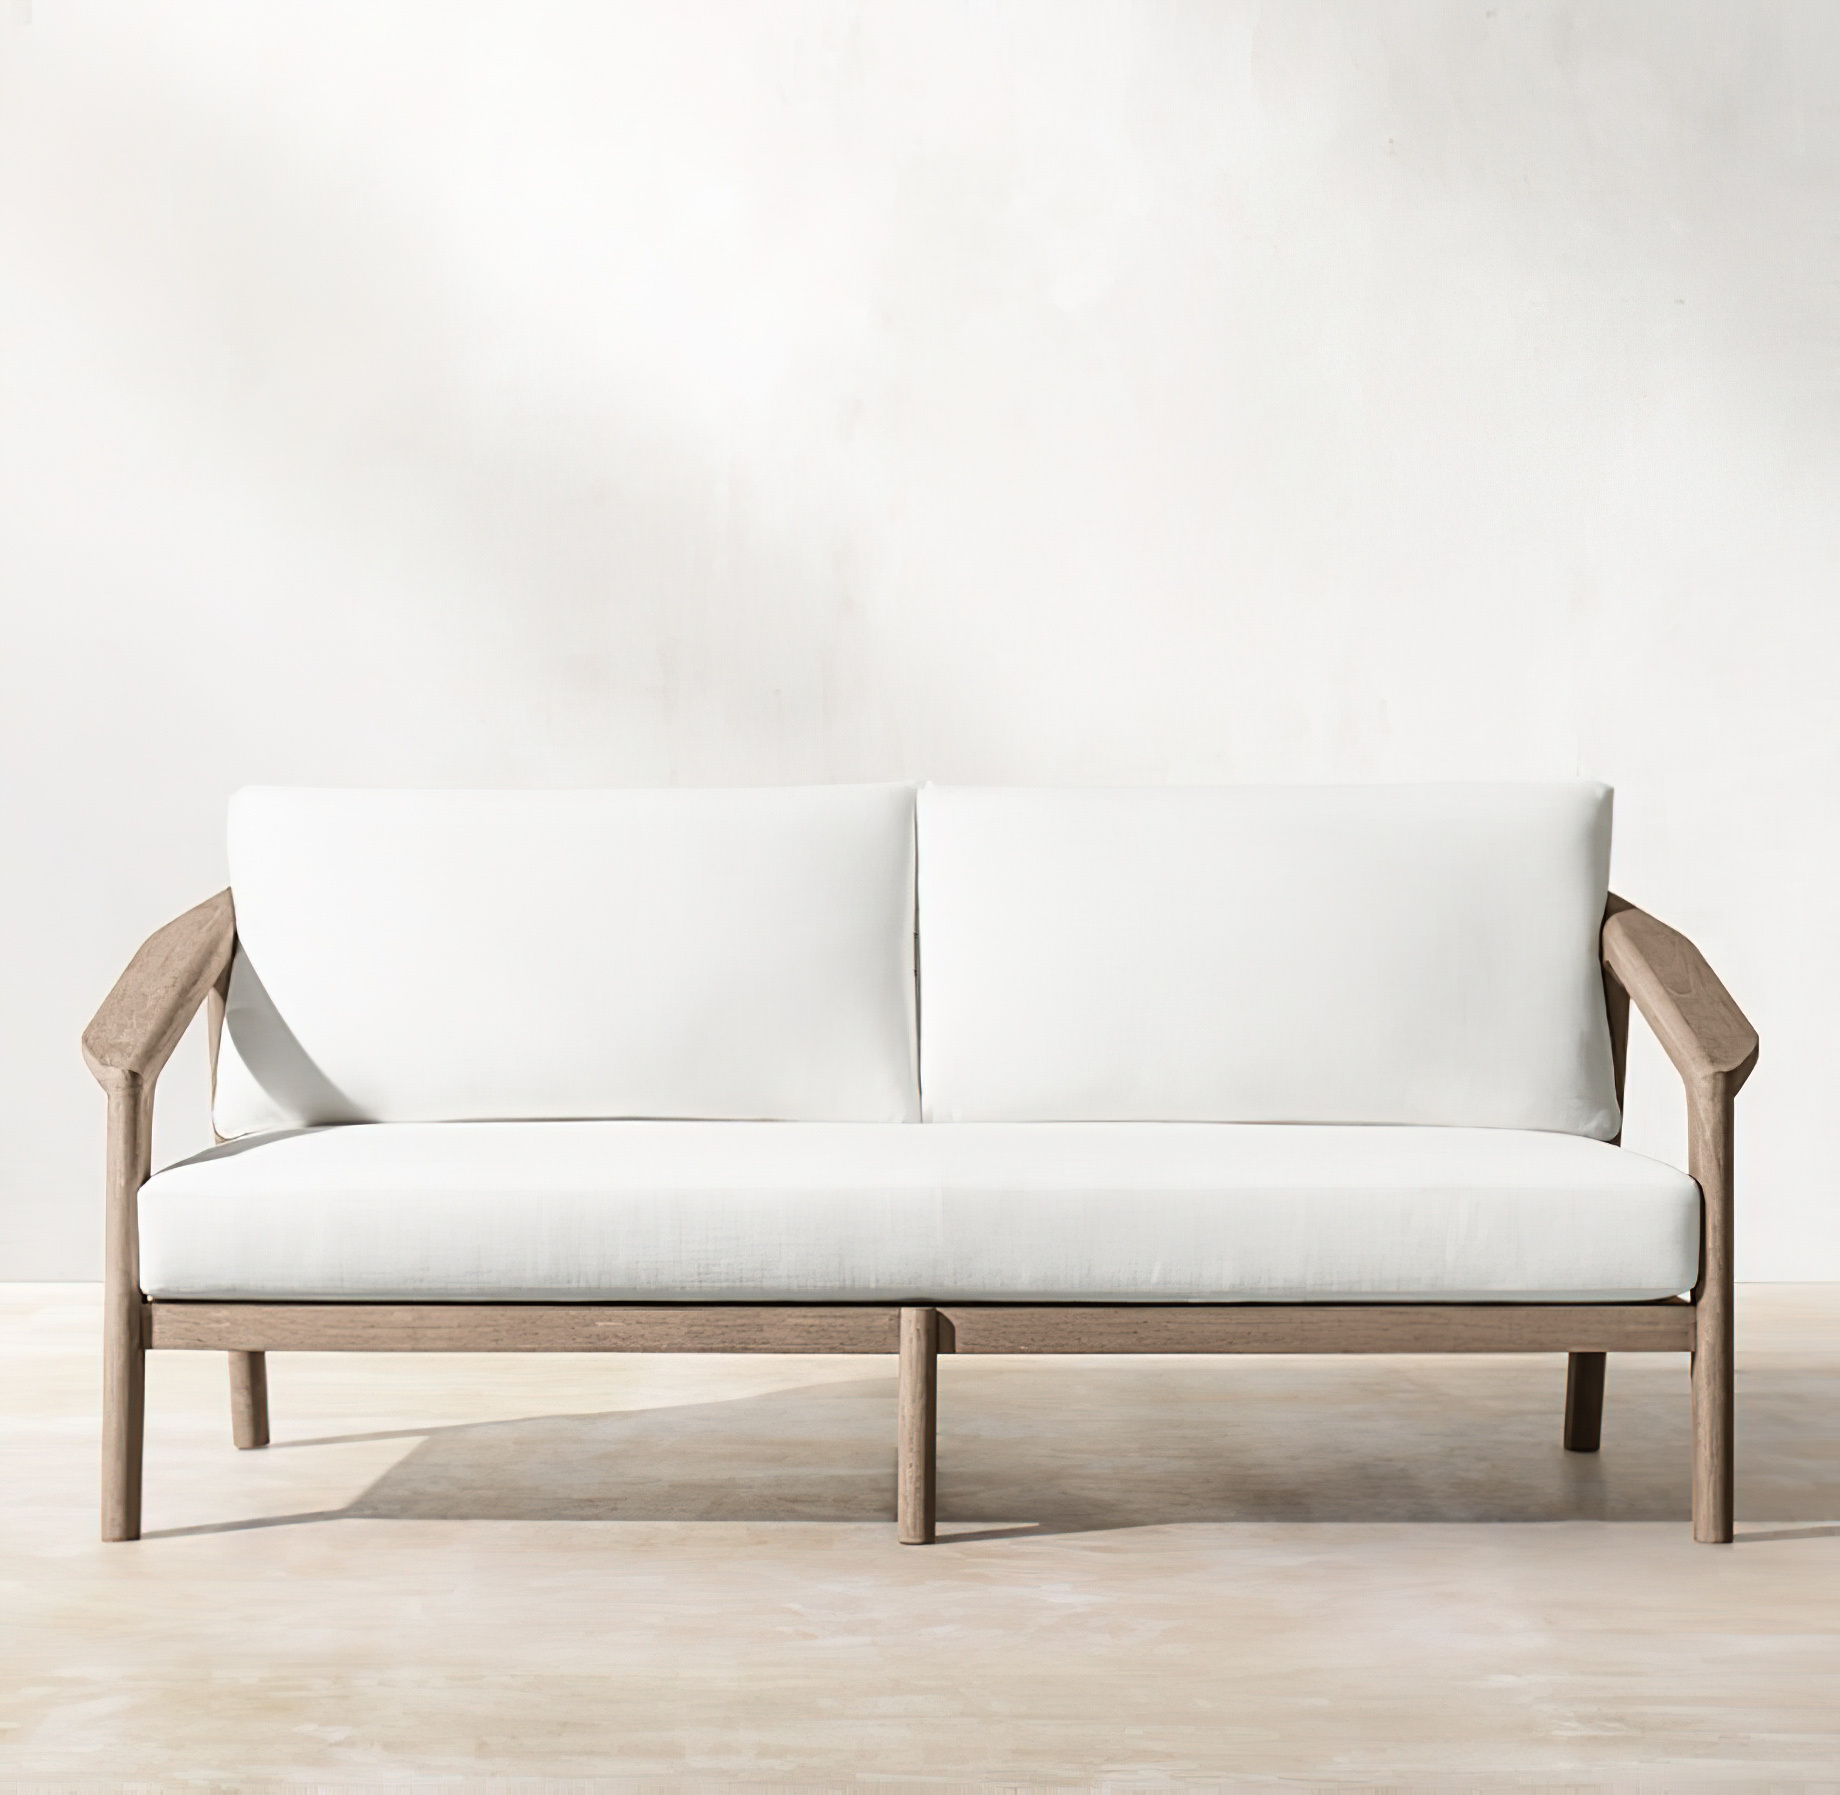 Malta Teak Collection Outdoor Furniture Design for RH – Ramon Esteve – Malta Teak 72 Small Sofa